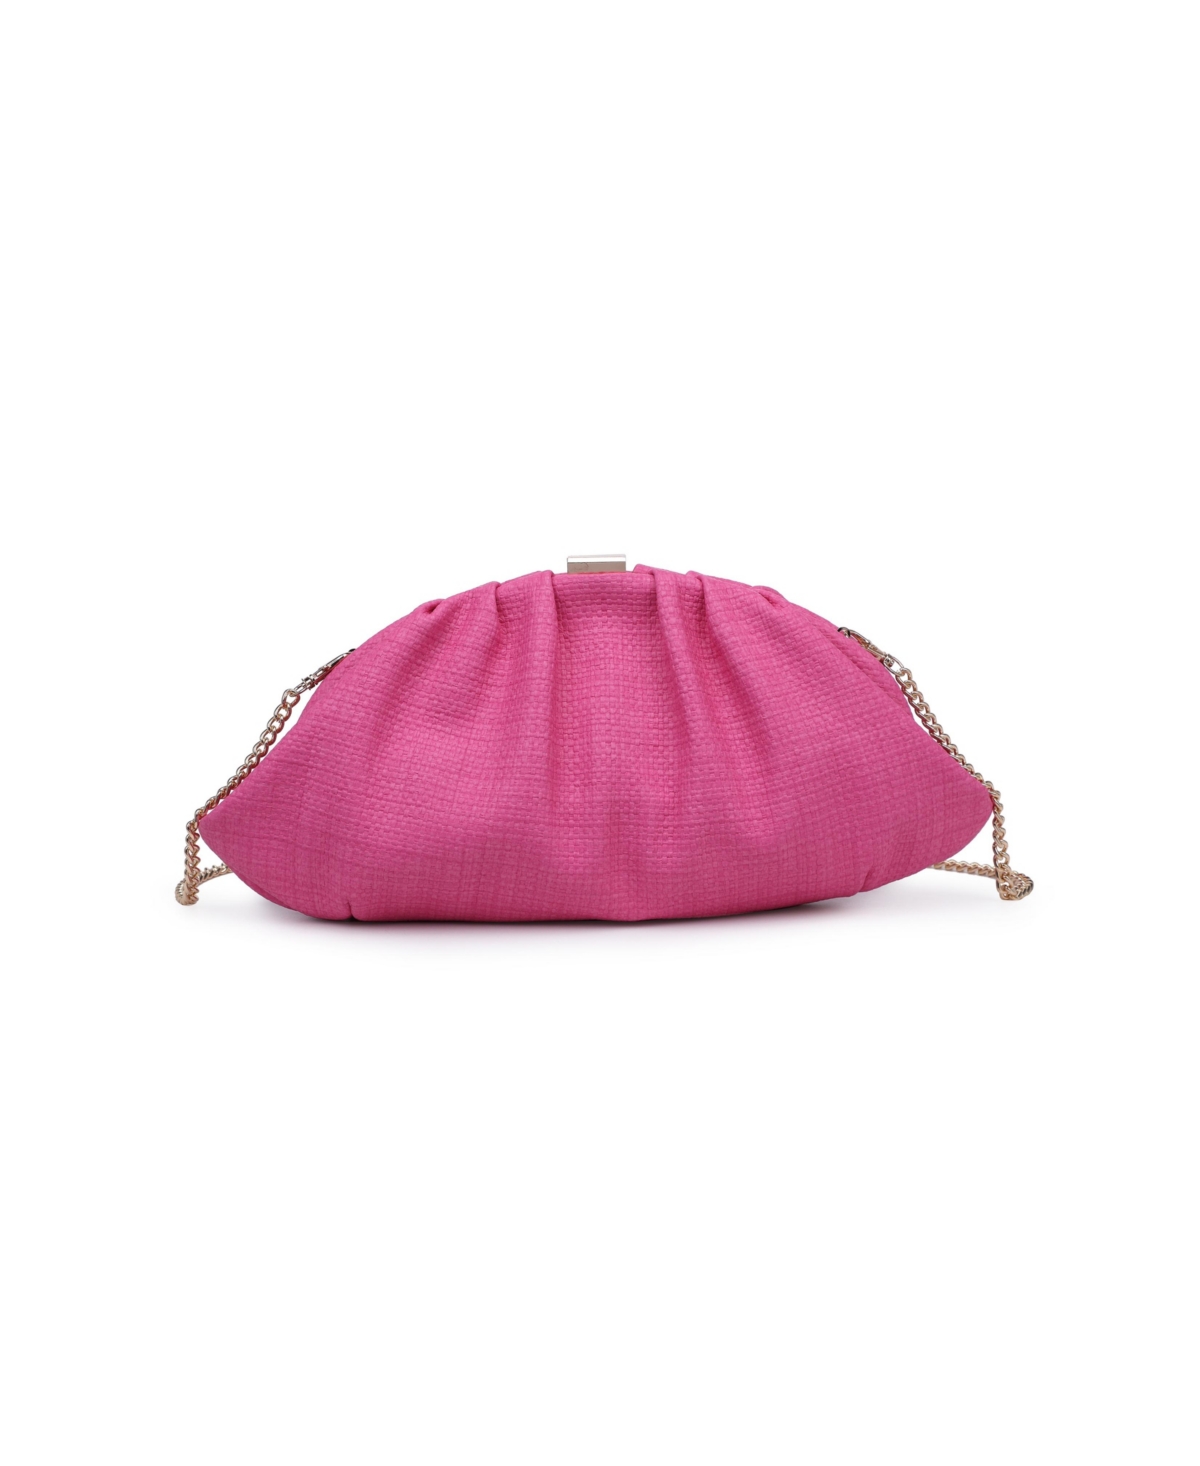 Moda Luxe Calla Small Clutch Bag In Hot Pink